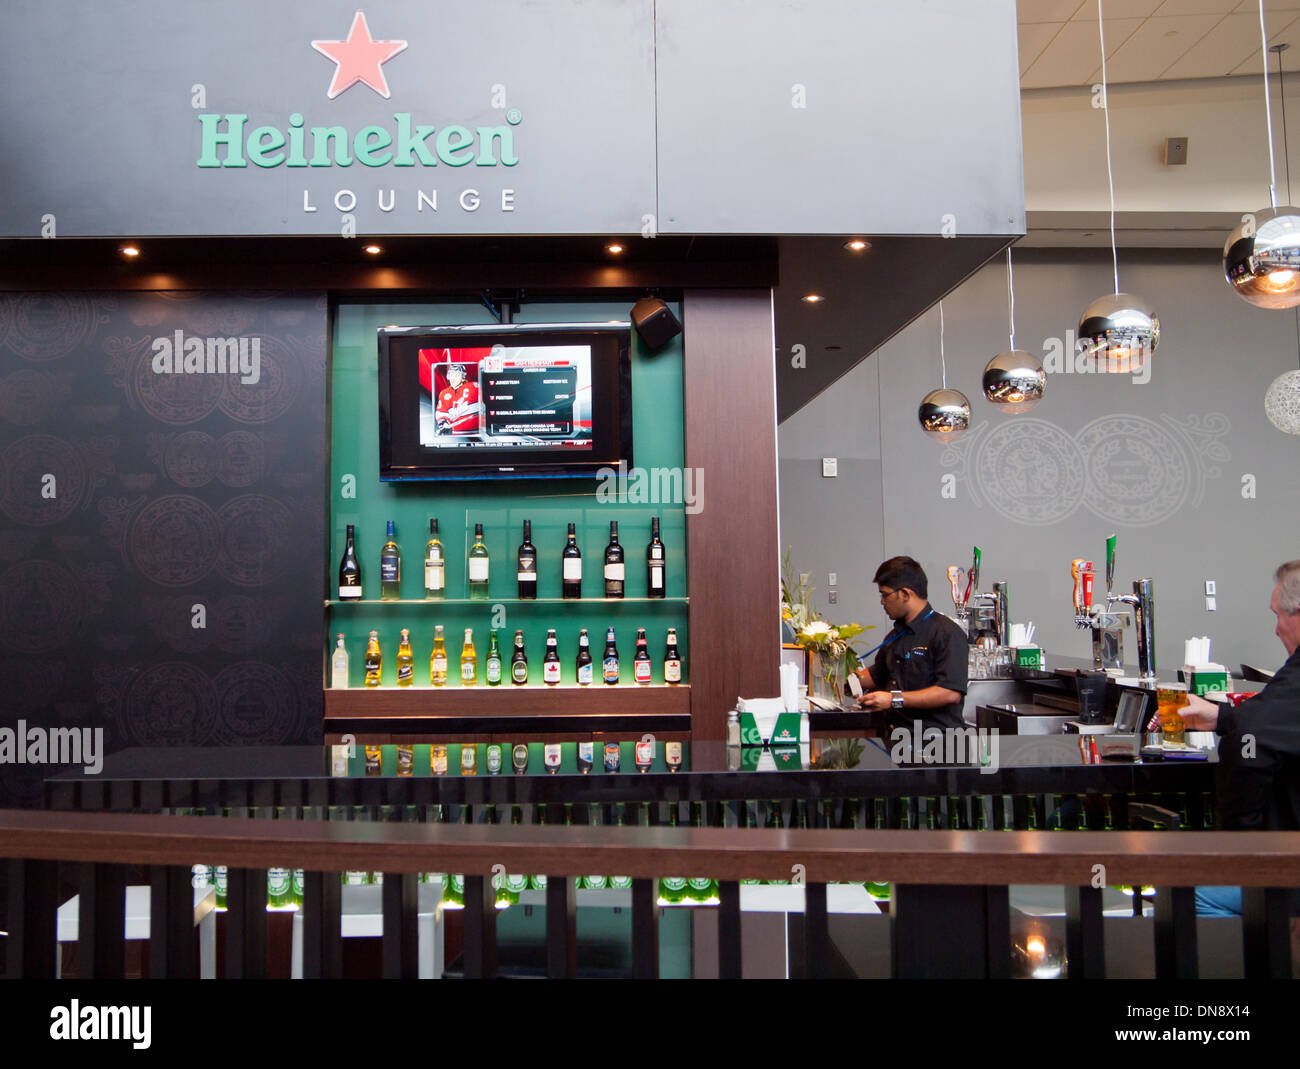 A view of the Heineken Lounge in Edmonton International Airport (airport code: YEG) in Edmonton, Alberta, Canada. Stock Photo